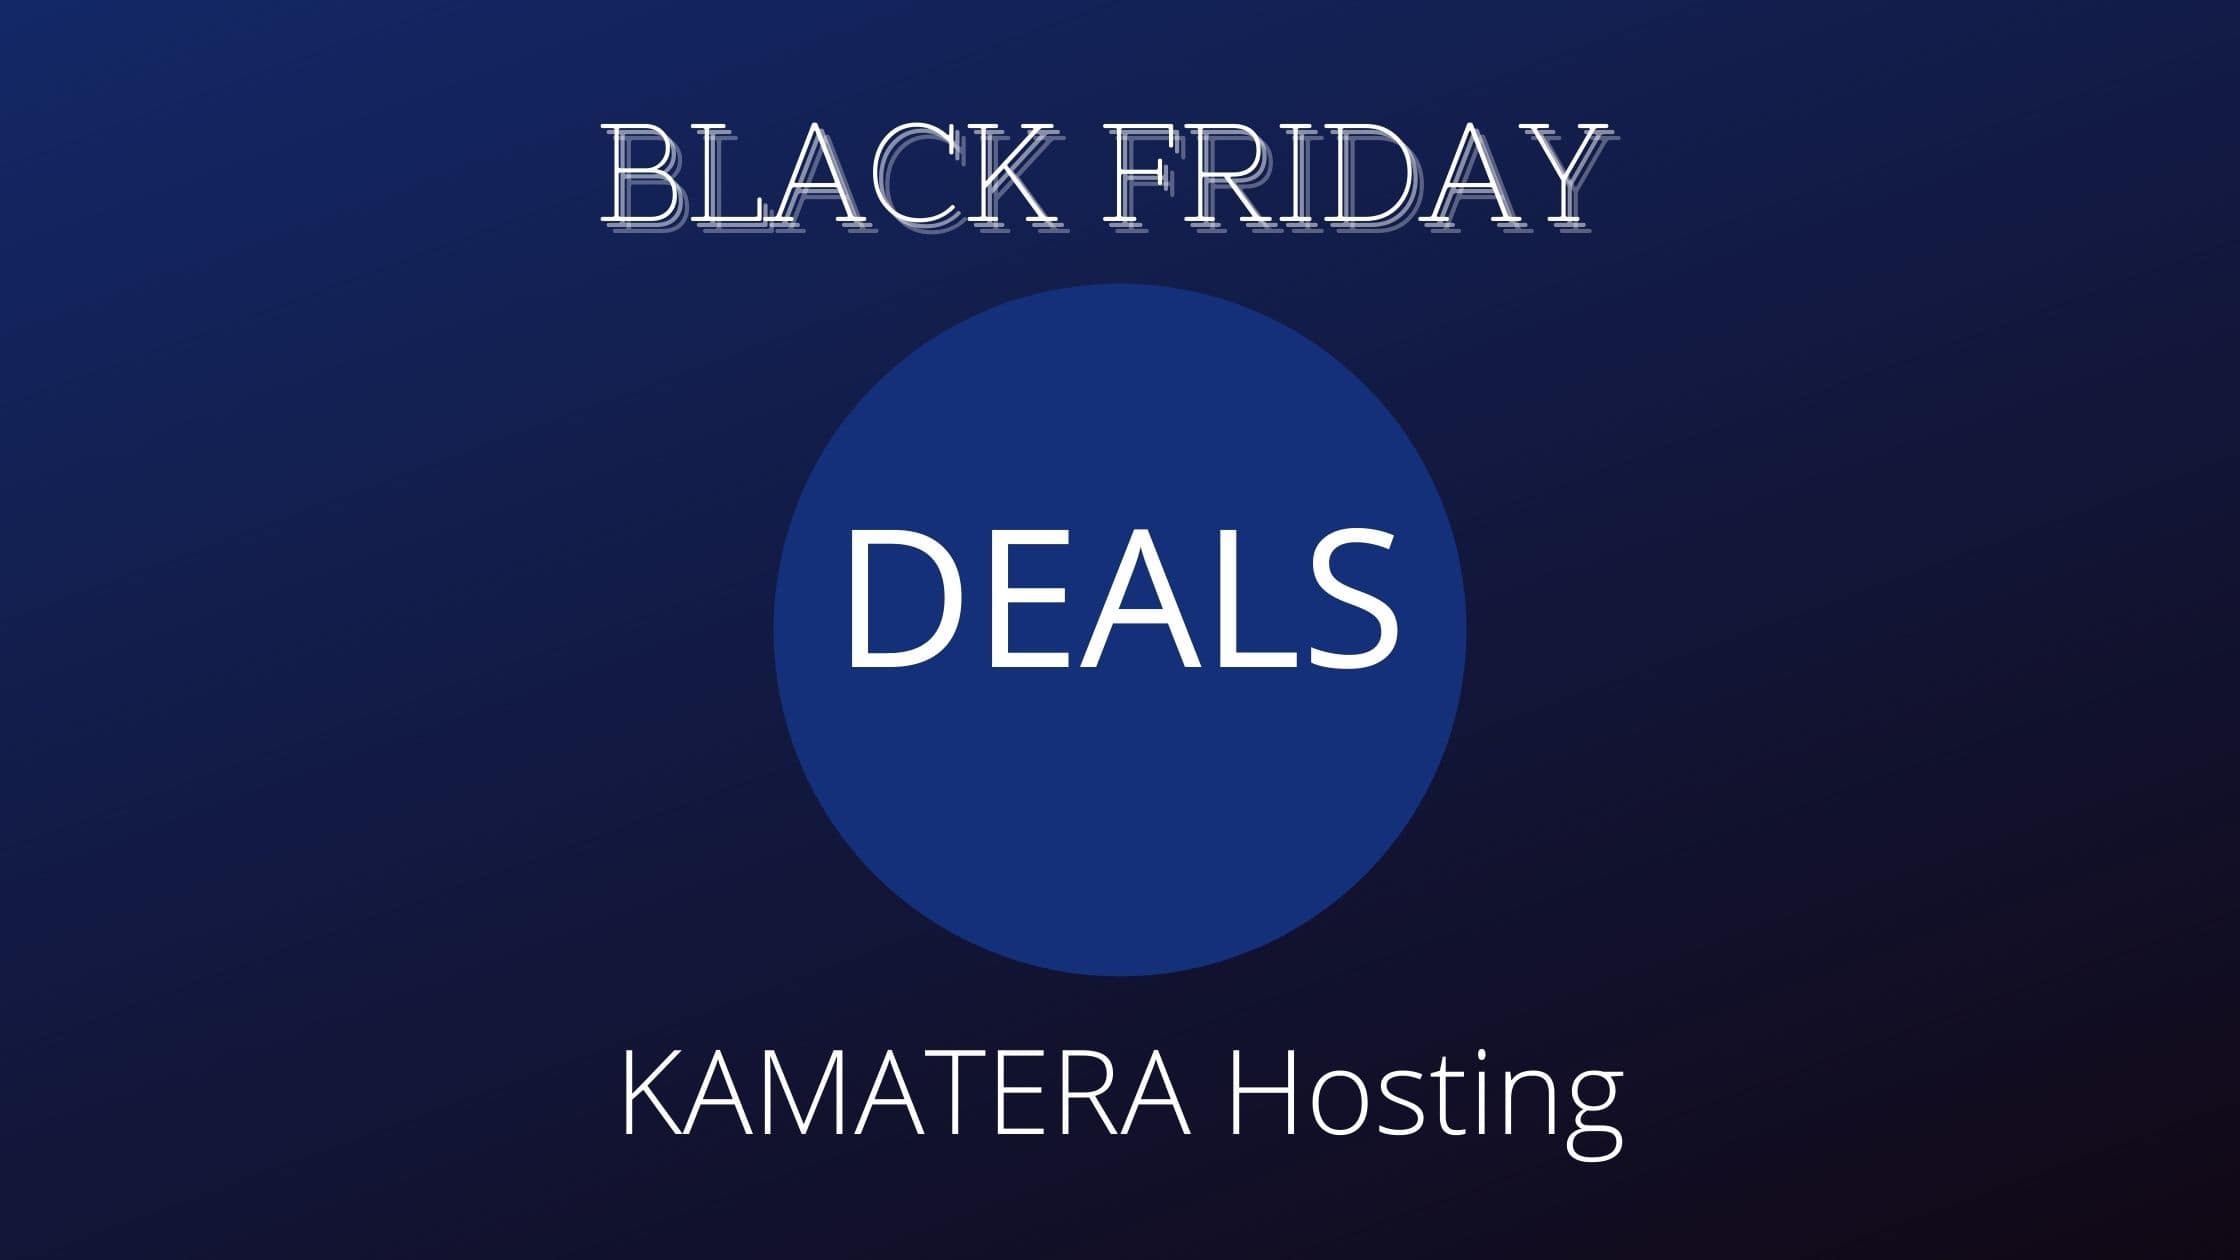 KAMATERA Black Friday Deals 2021- Get Up To 65% Off image